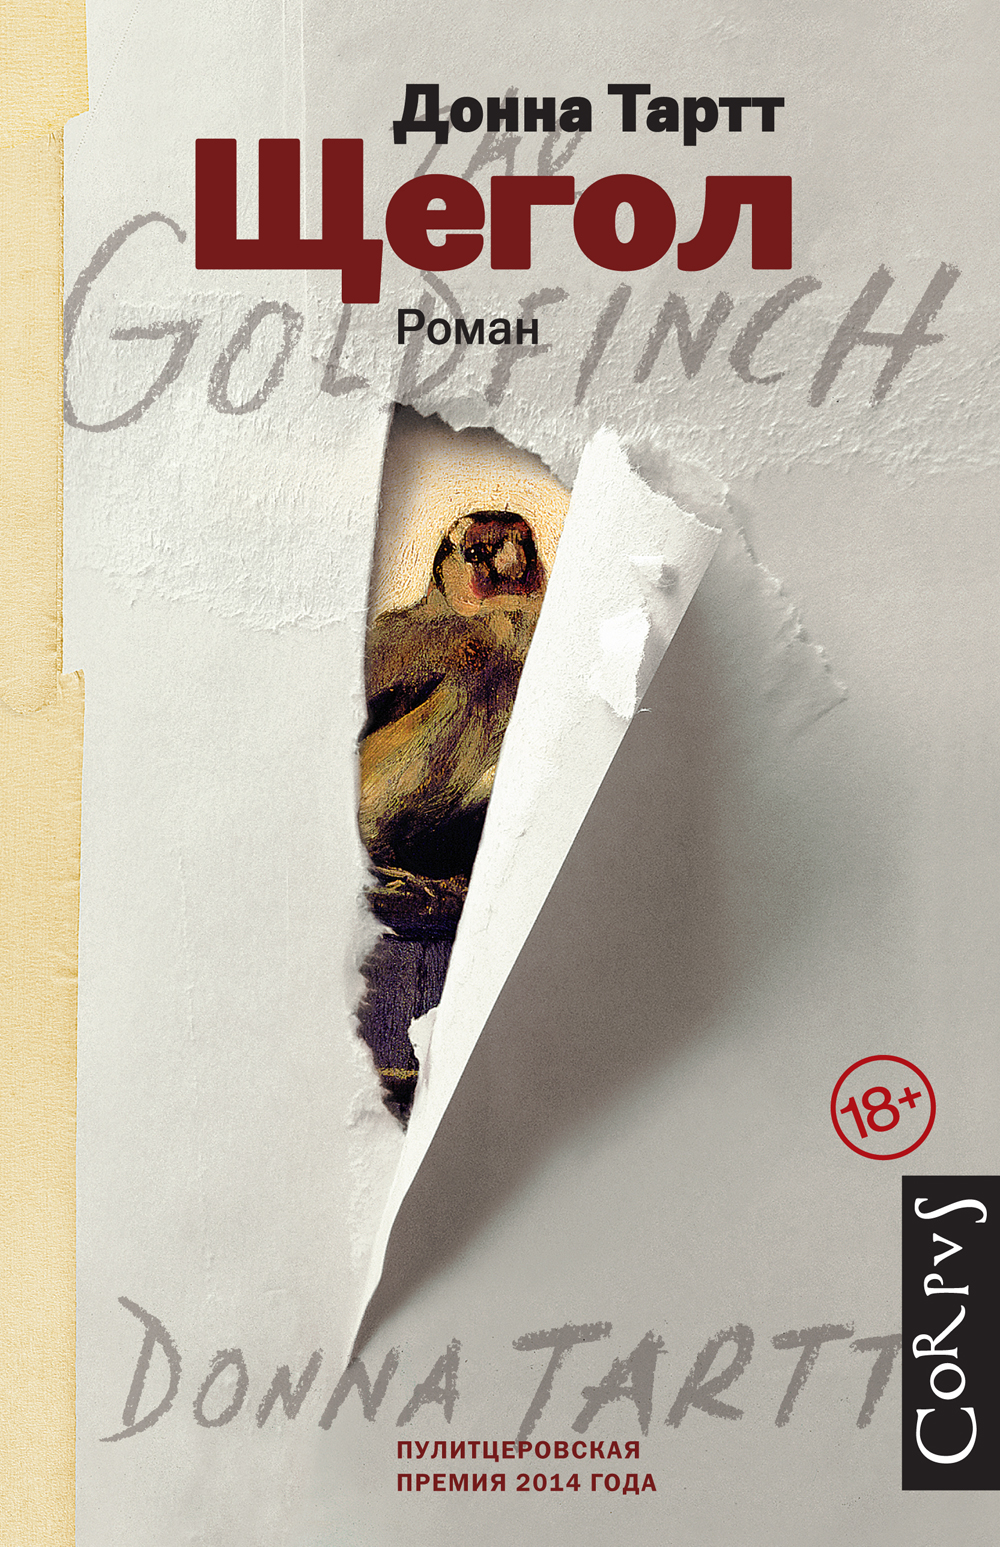 Book “Щегол” by Донна Тартт — November 20, 2014